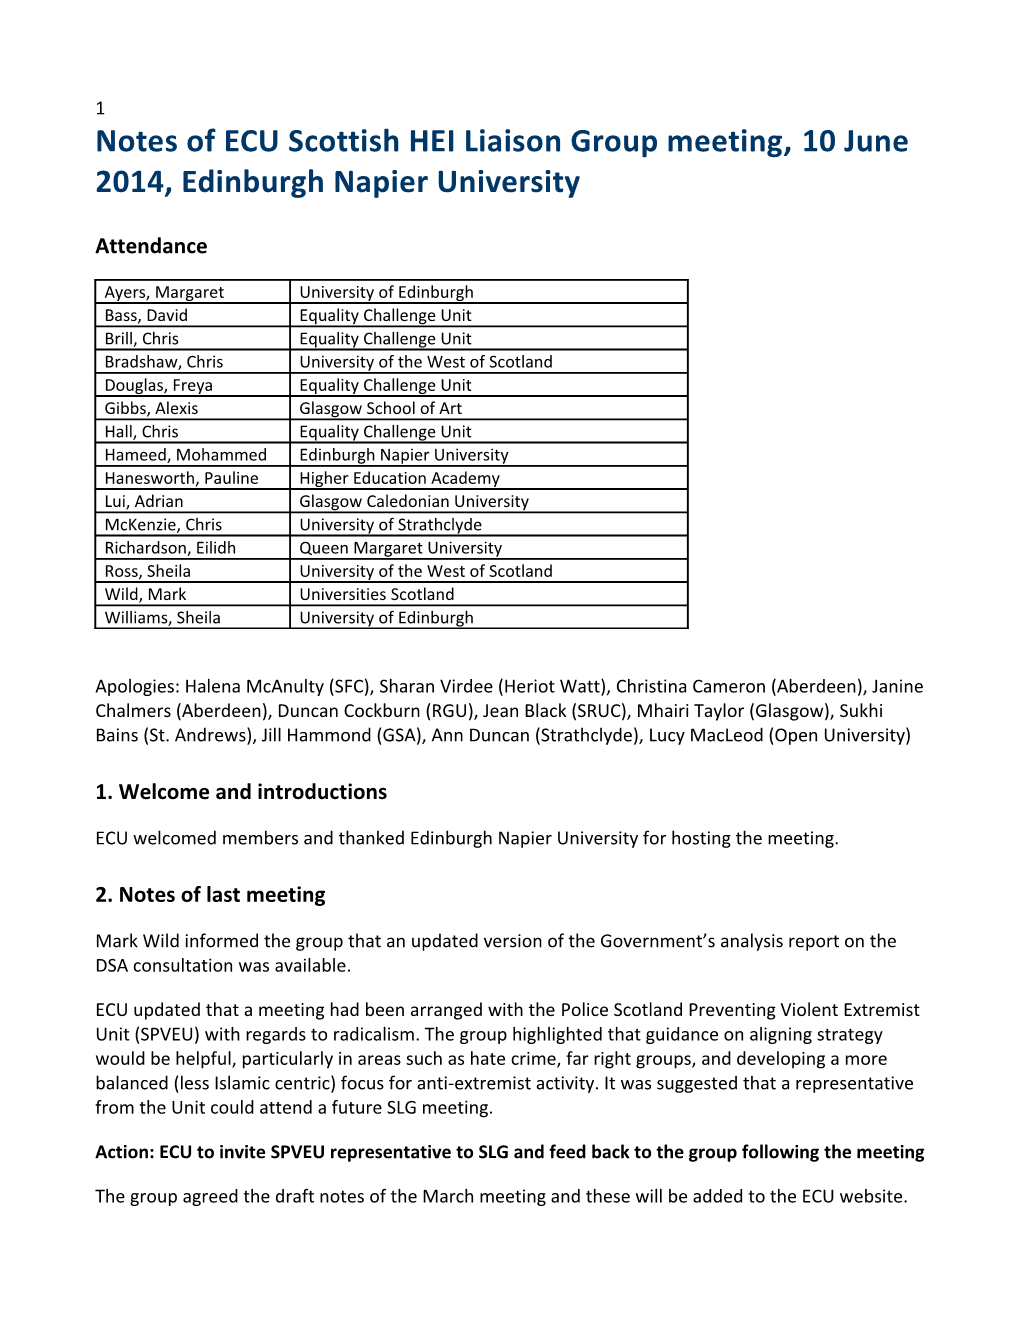 Notes of ECU Scottish HEI Liaison Group Meeting, 10 June 2014,Edinburgh Napier University